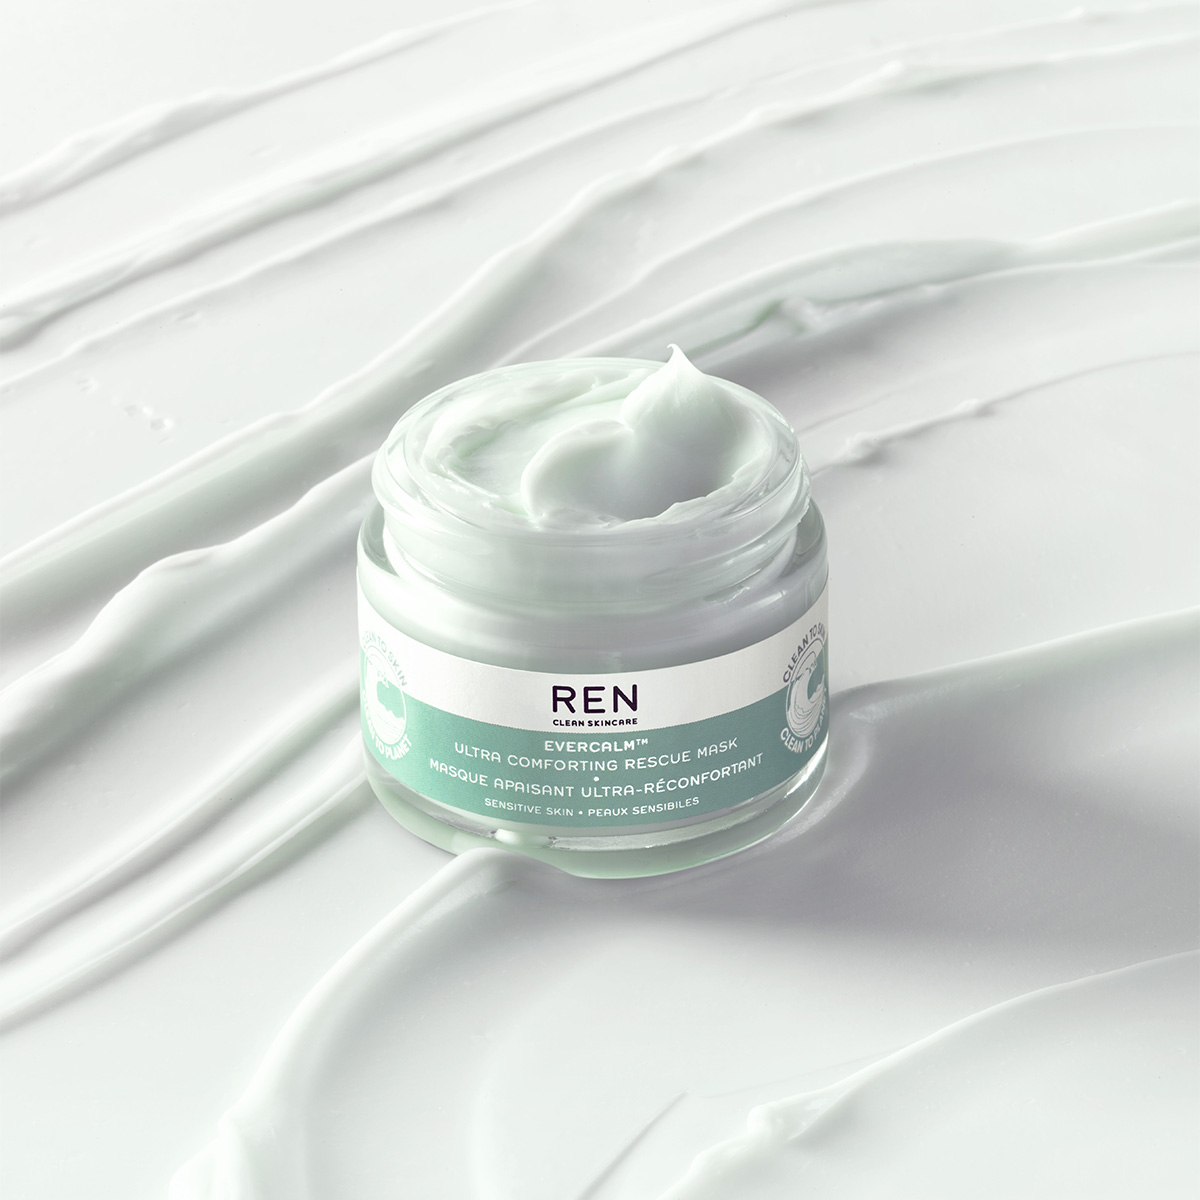 Ren Clean Skincare - Evercalm Ultra Comforting Rescue Mask